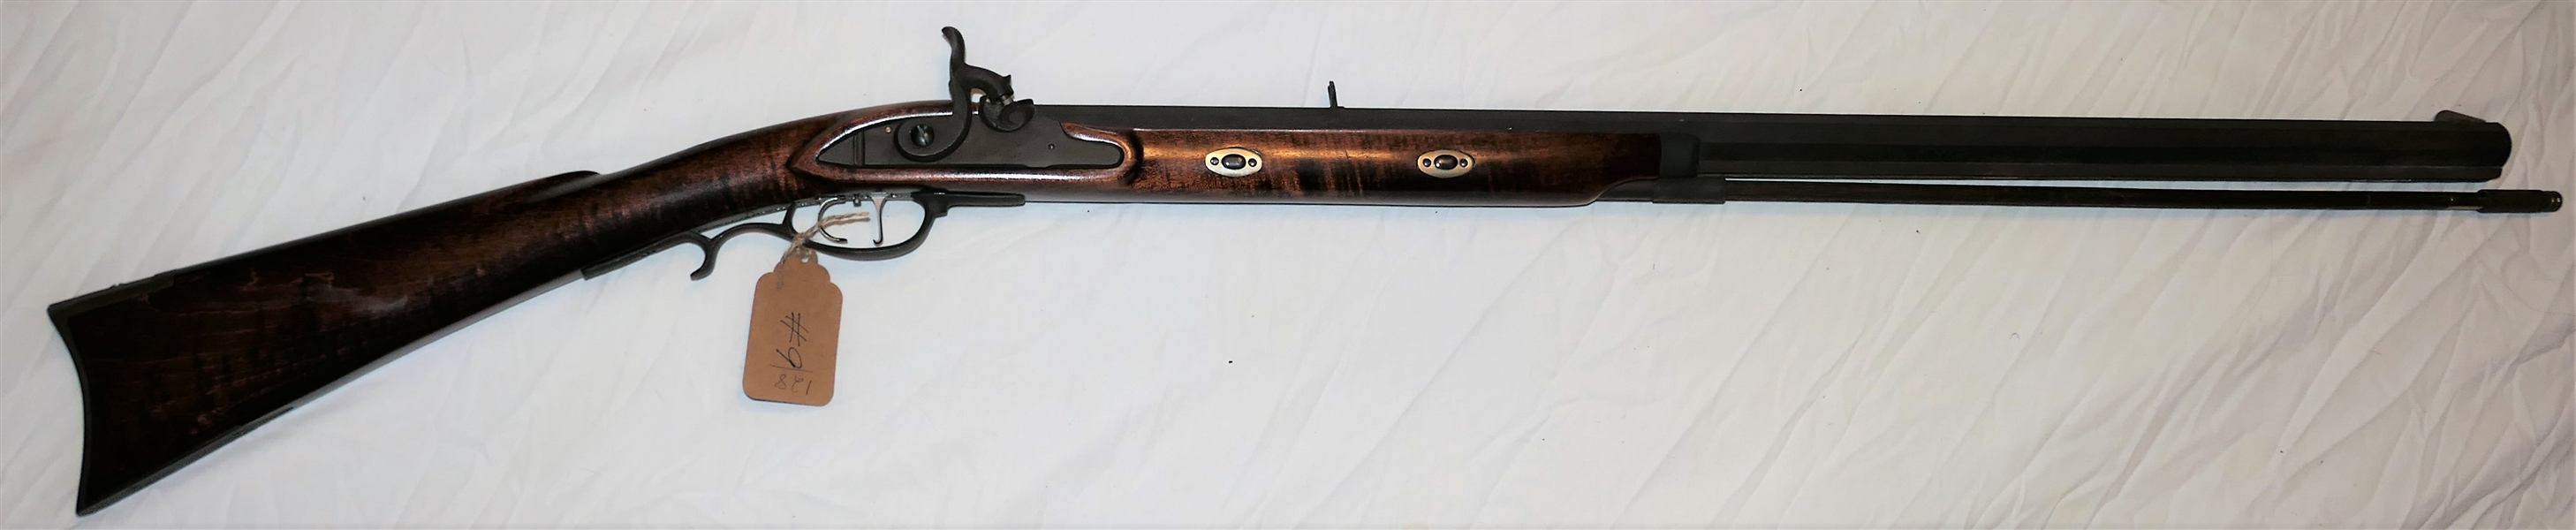 Hatfield .50 Caliber Black Powder Long Rifle - Beautiful Flame Mahogany Wood Stock - Some Rust on Ram Rod and Underside of Barrel